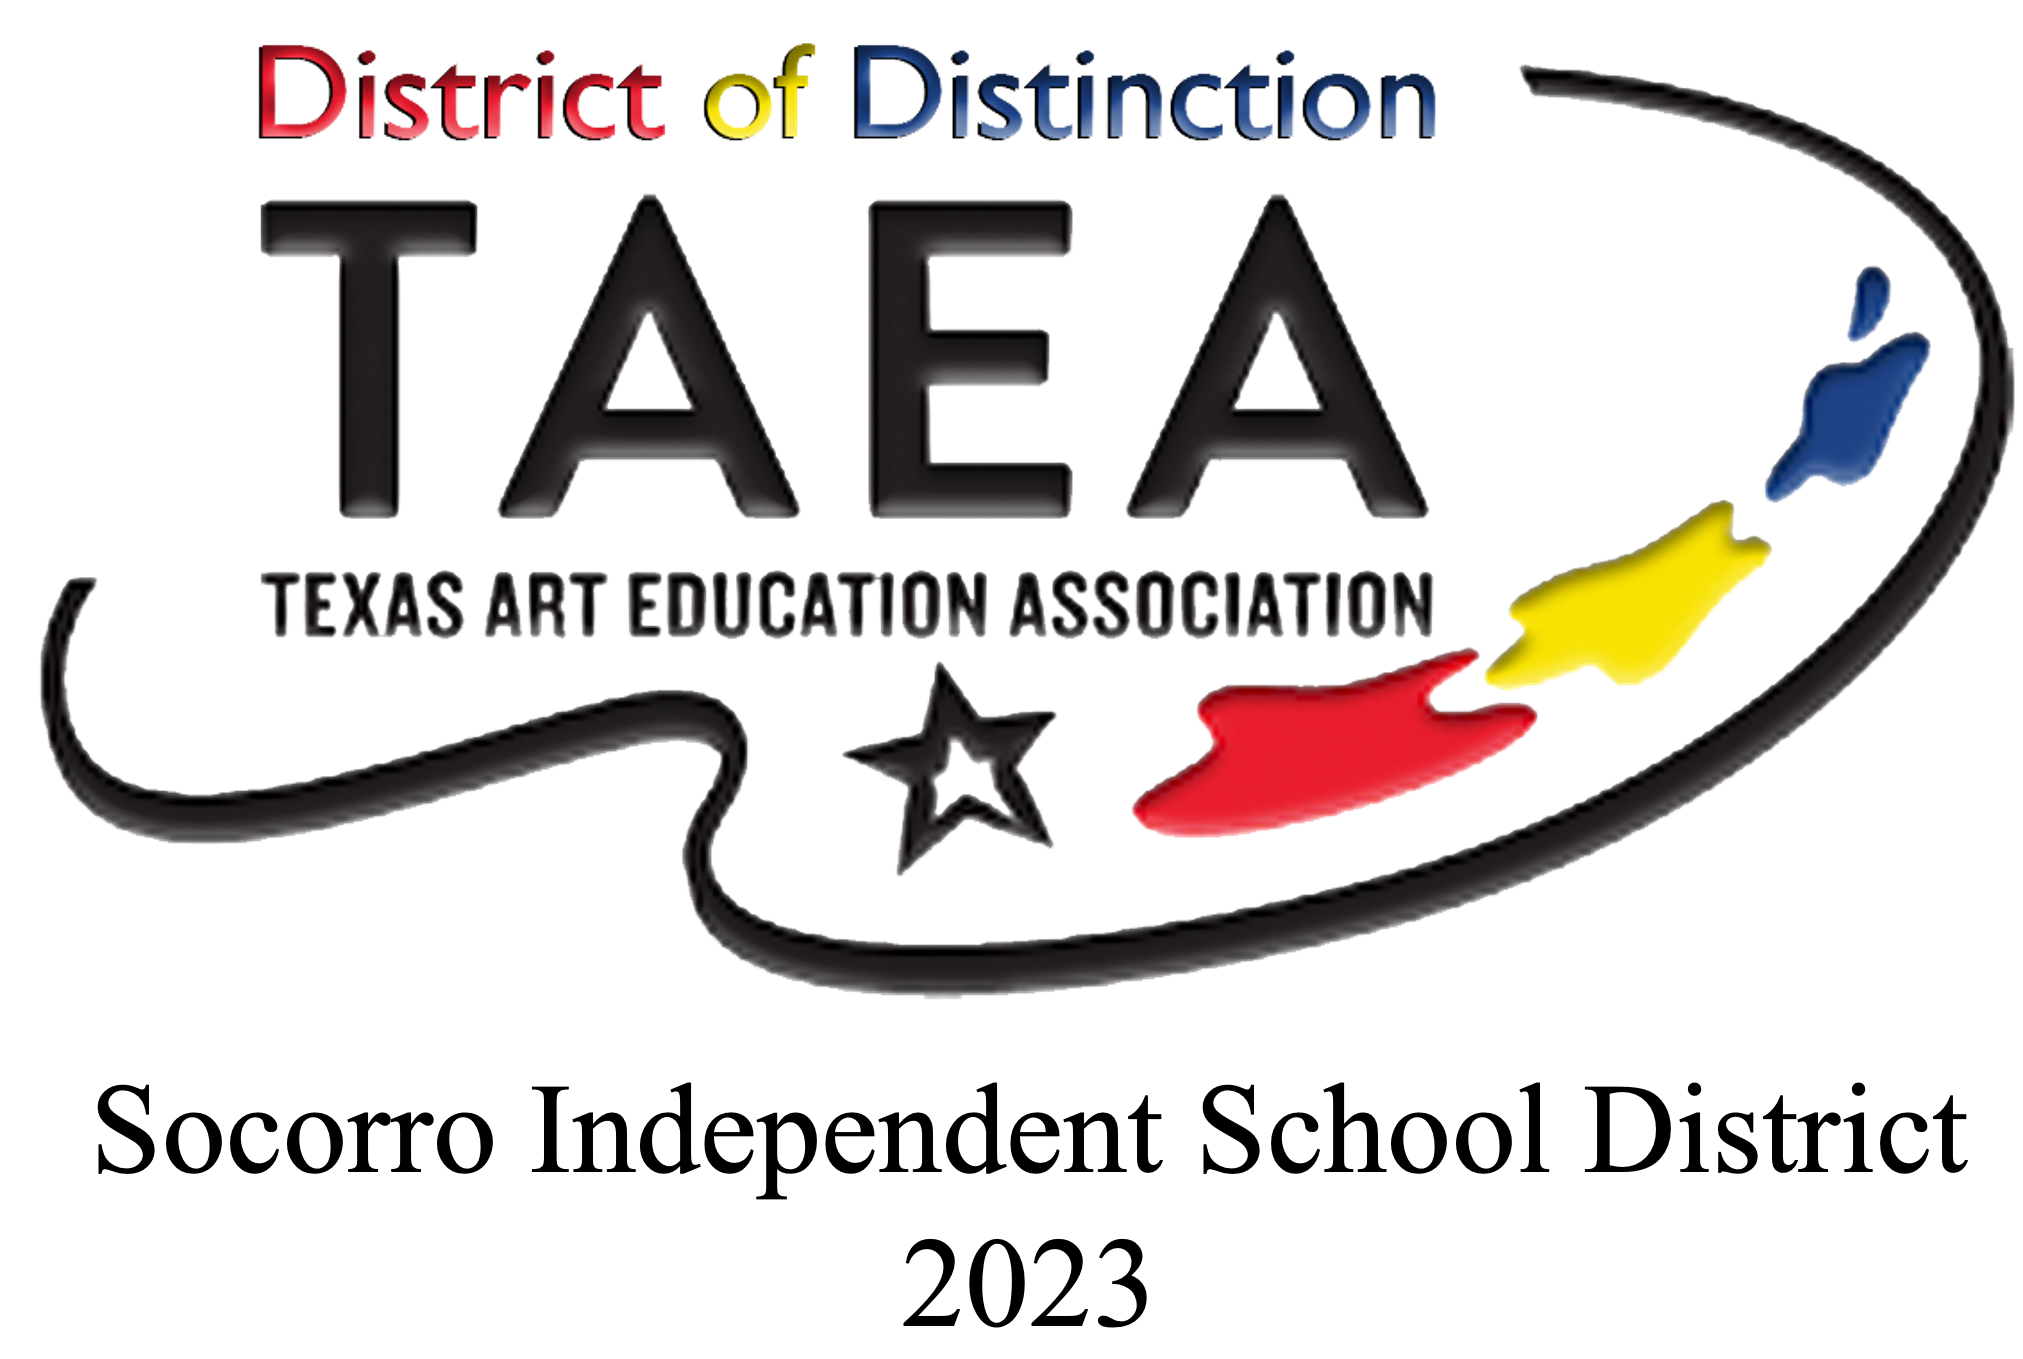 2021 District of Distinction Texas Art Education Association, Socorro Independent School District